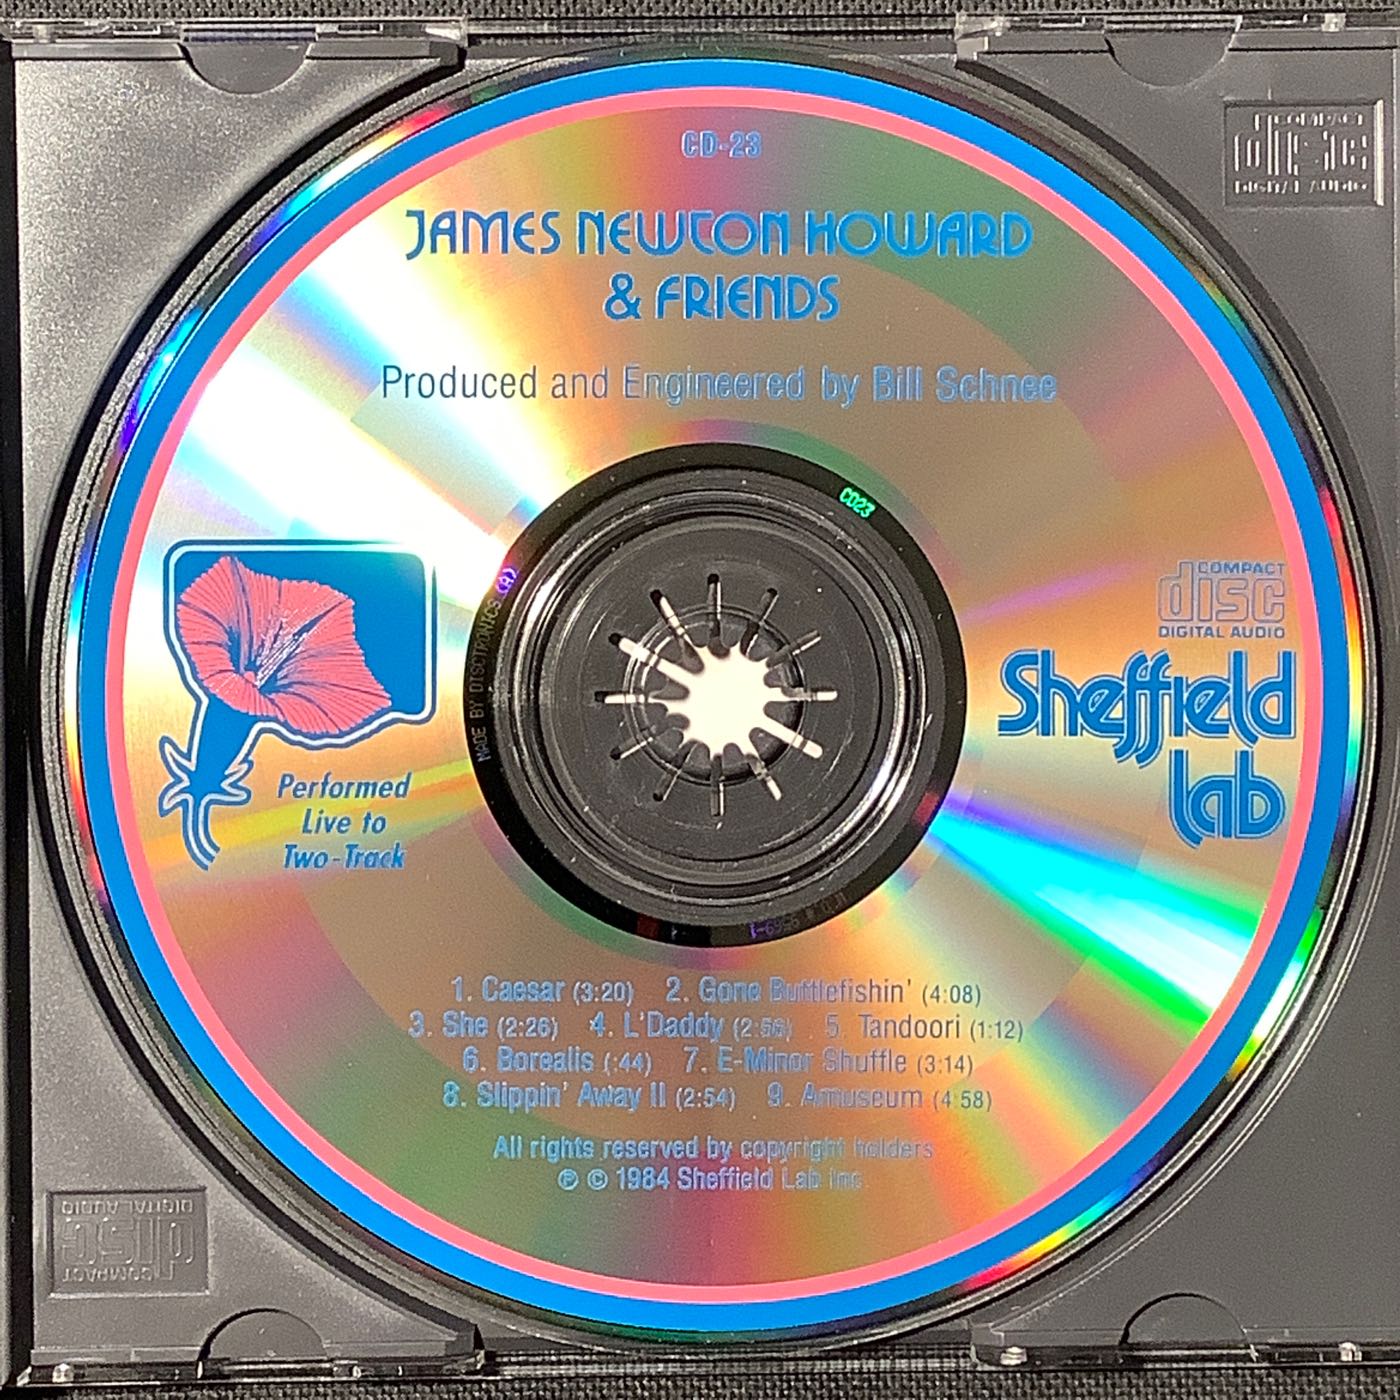 TAS榜/香港CD聖經/喇叭花銘盤/多手仔James Newton Howard & Friends 